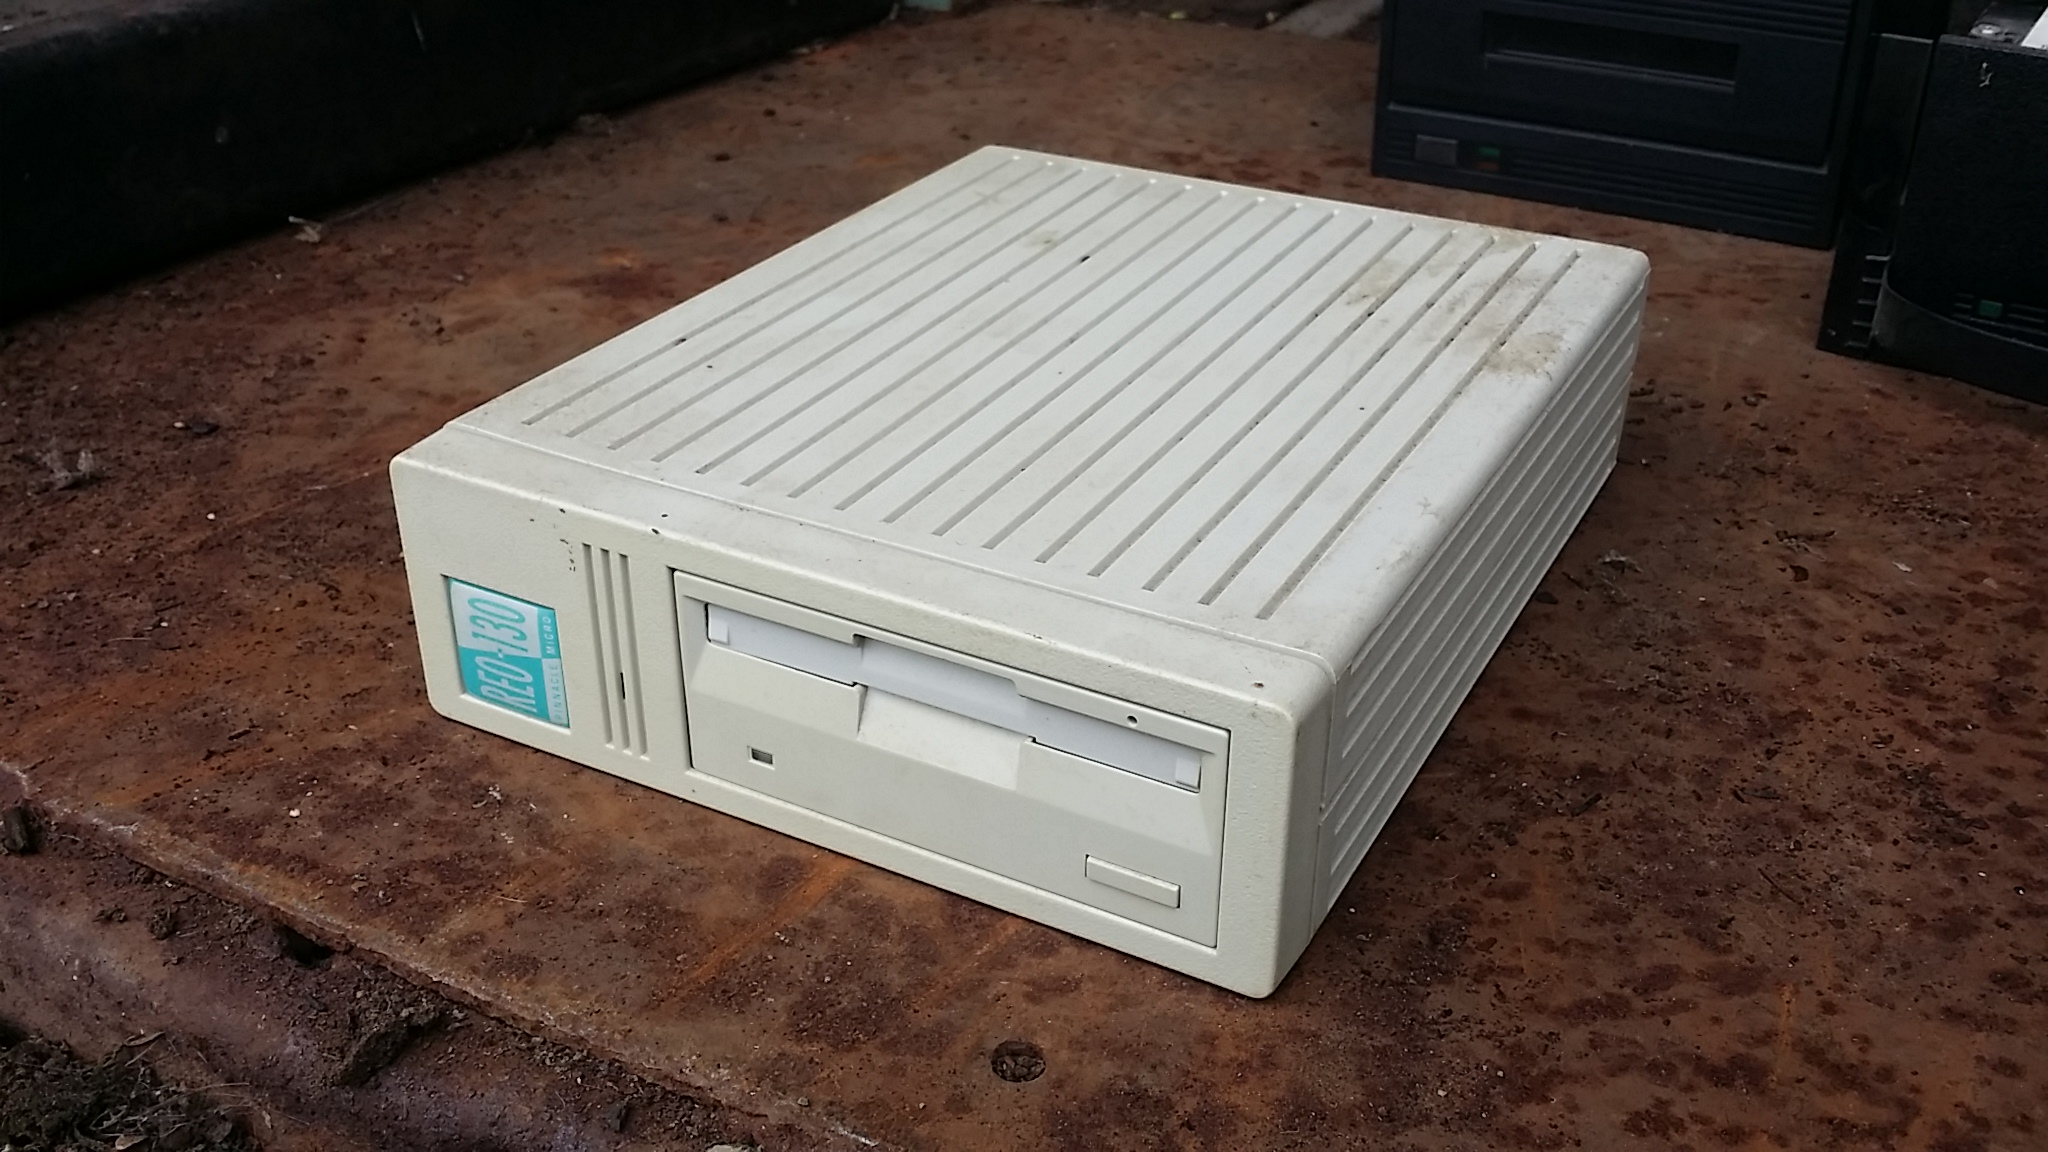 130M 3.5" MO Disk Drive